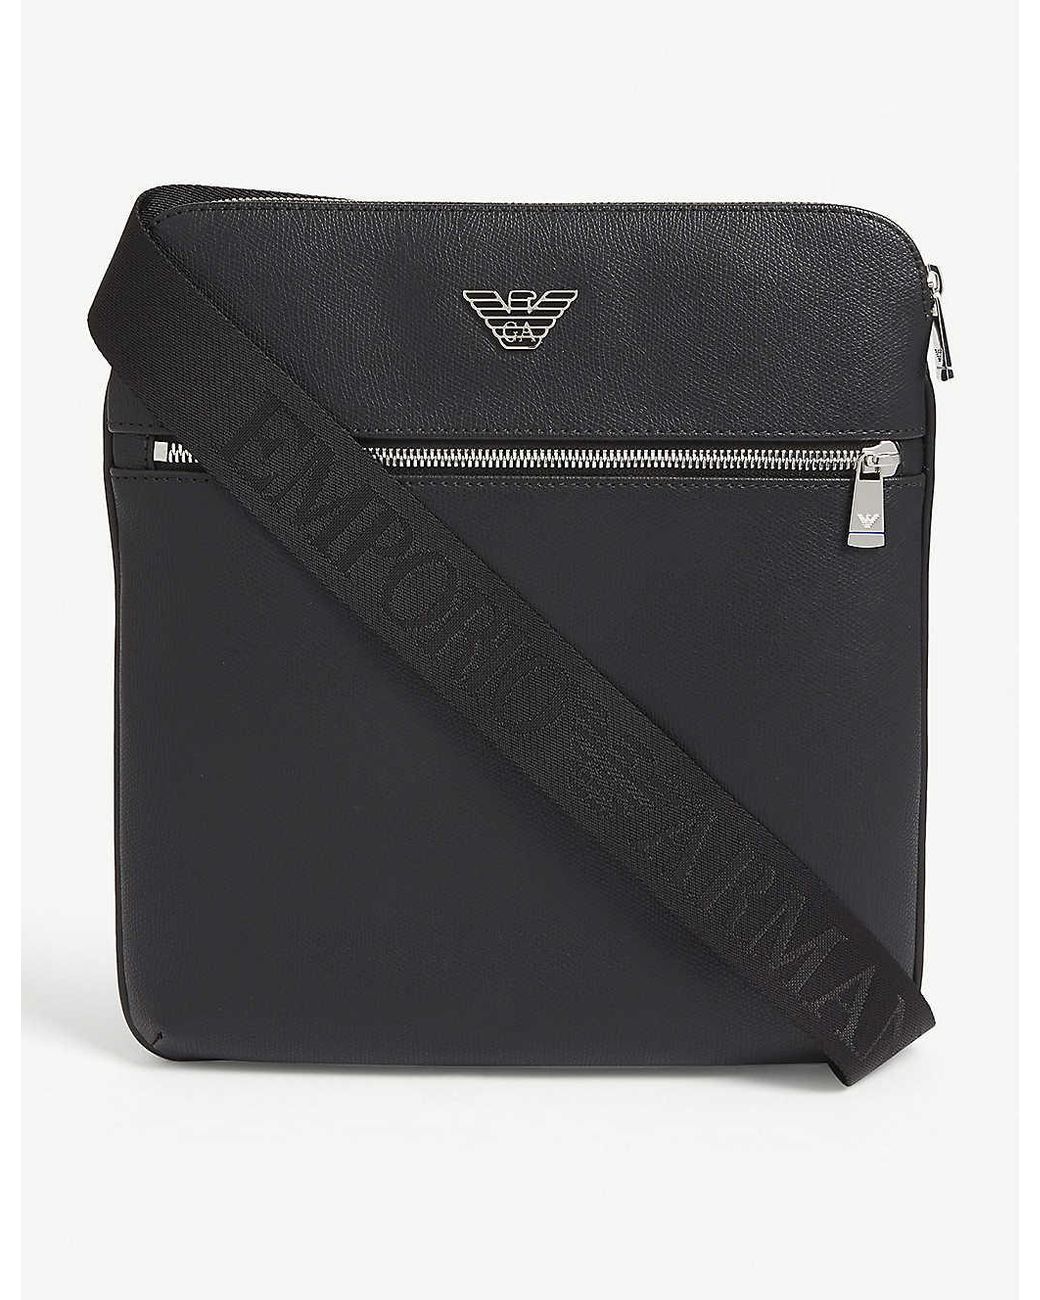 Emporio Armani Logo Messenger Bag in Black for Men - Save 58% - Lyst